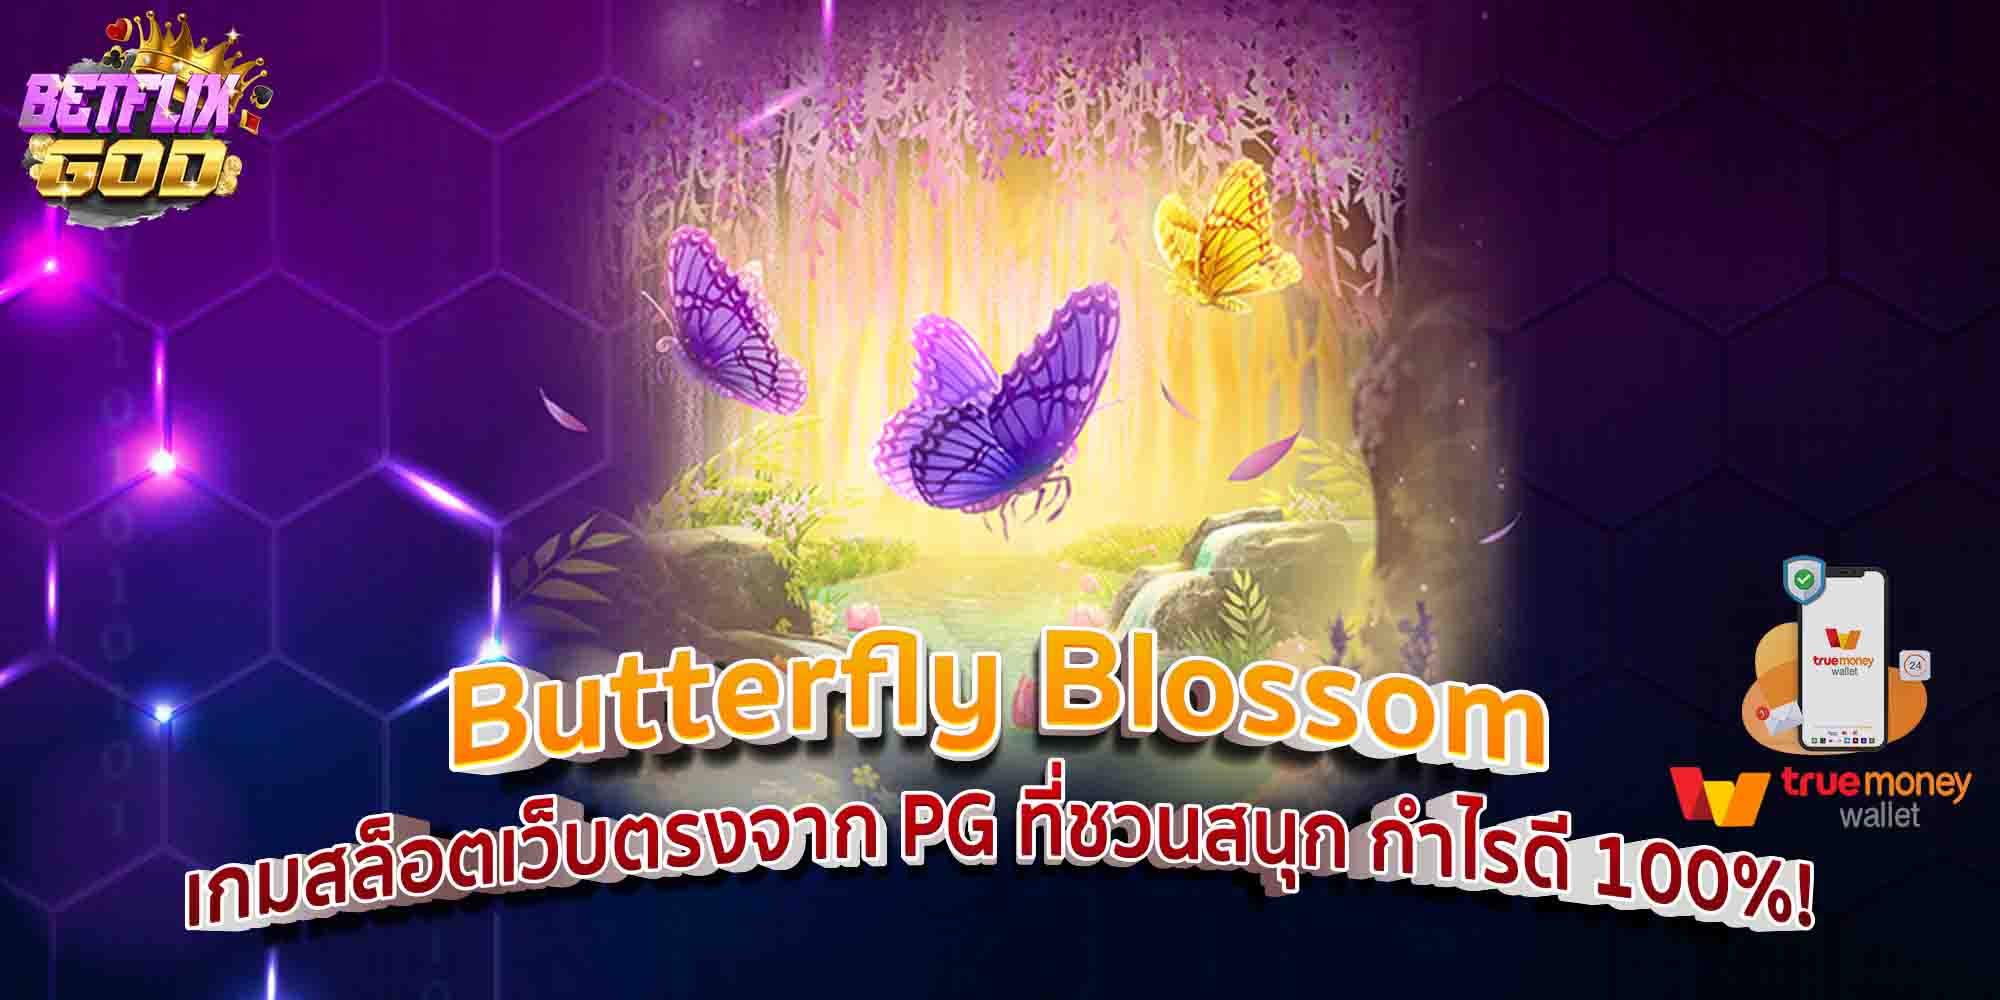 Butterfly Blossom เกมสล็อตเว็บตรงจาก PG ที่ชวนสนุก กำไรดี 100%!